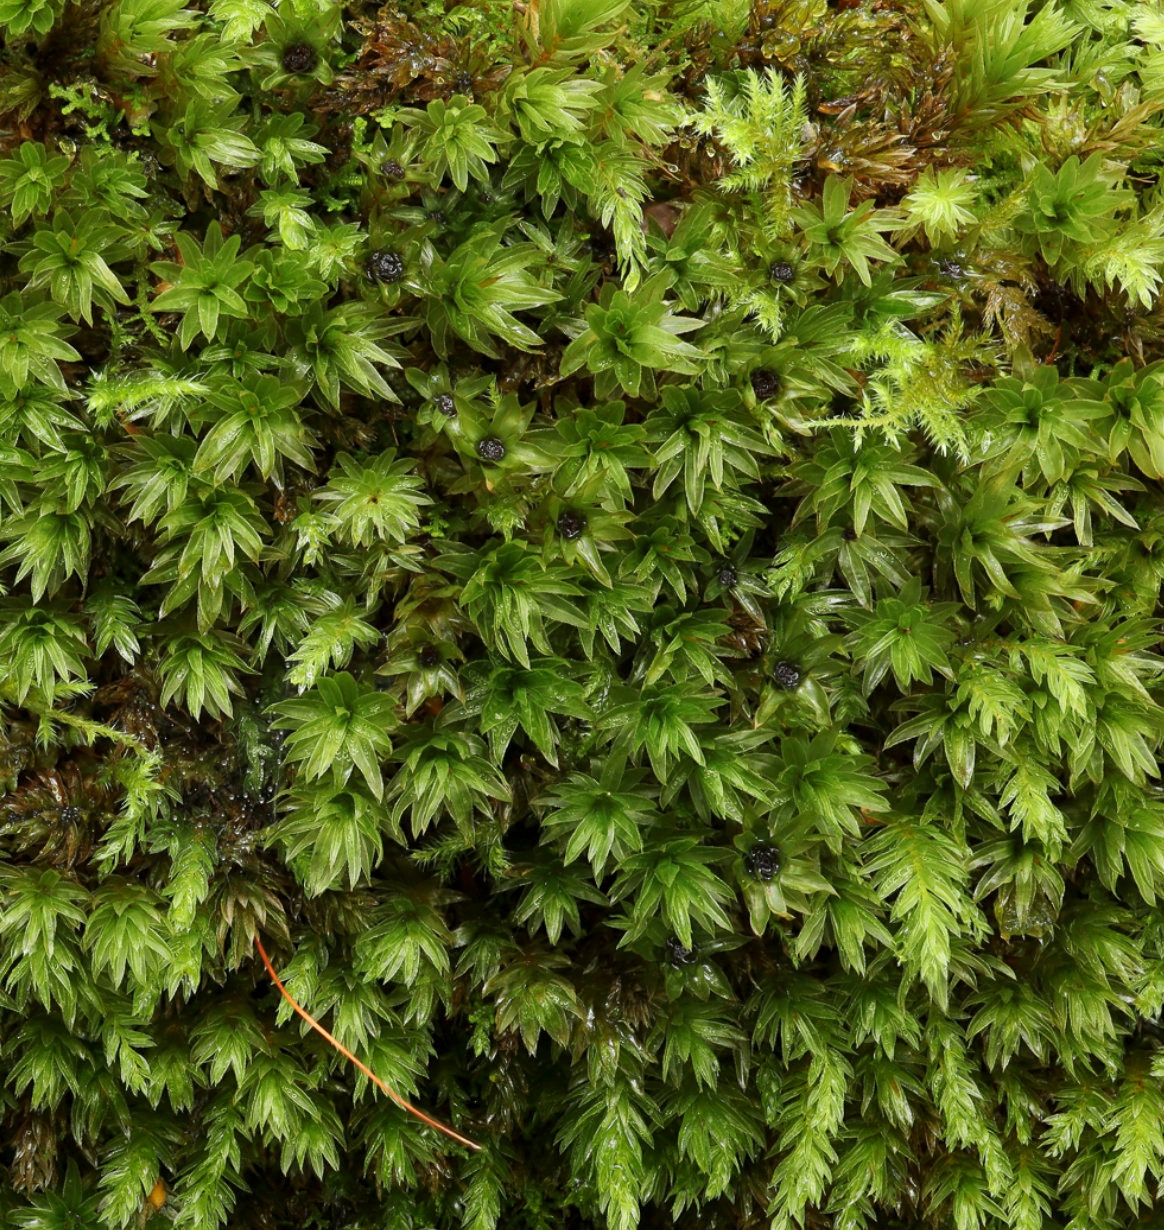 Terrarium moss Mnium hornum with Phytosanitary certification and Passport, grown by moss supplier